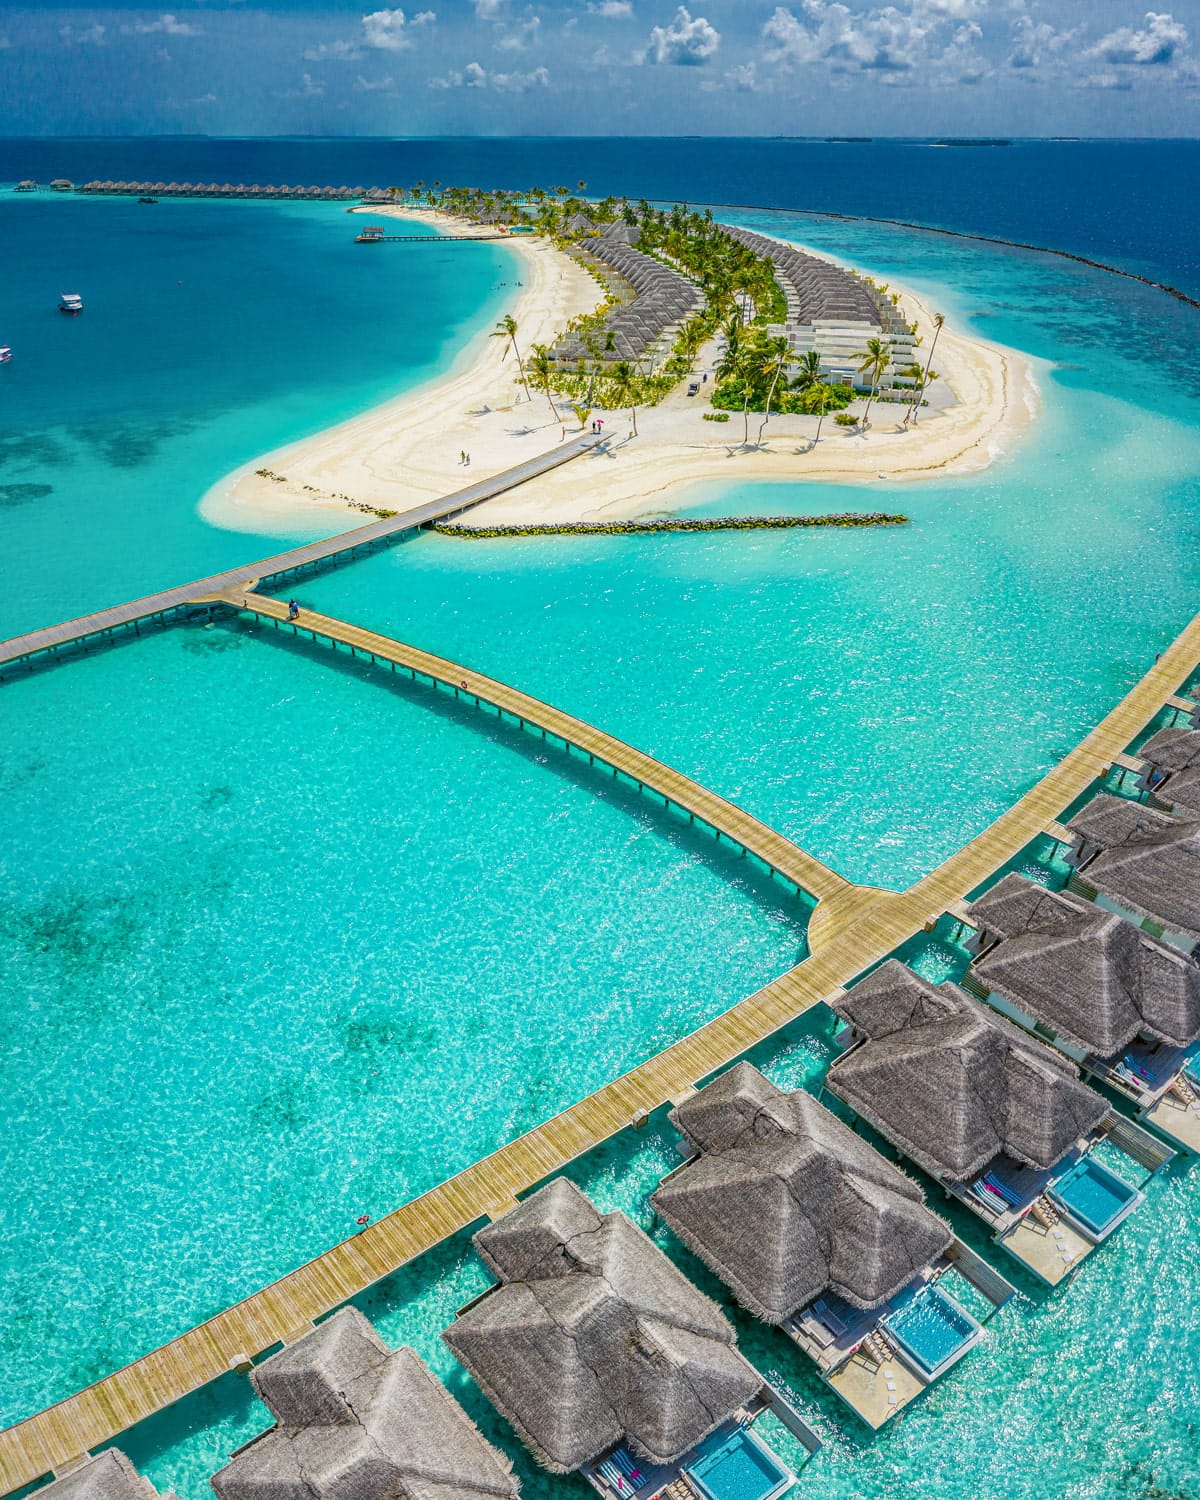 The Maldives in December